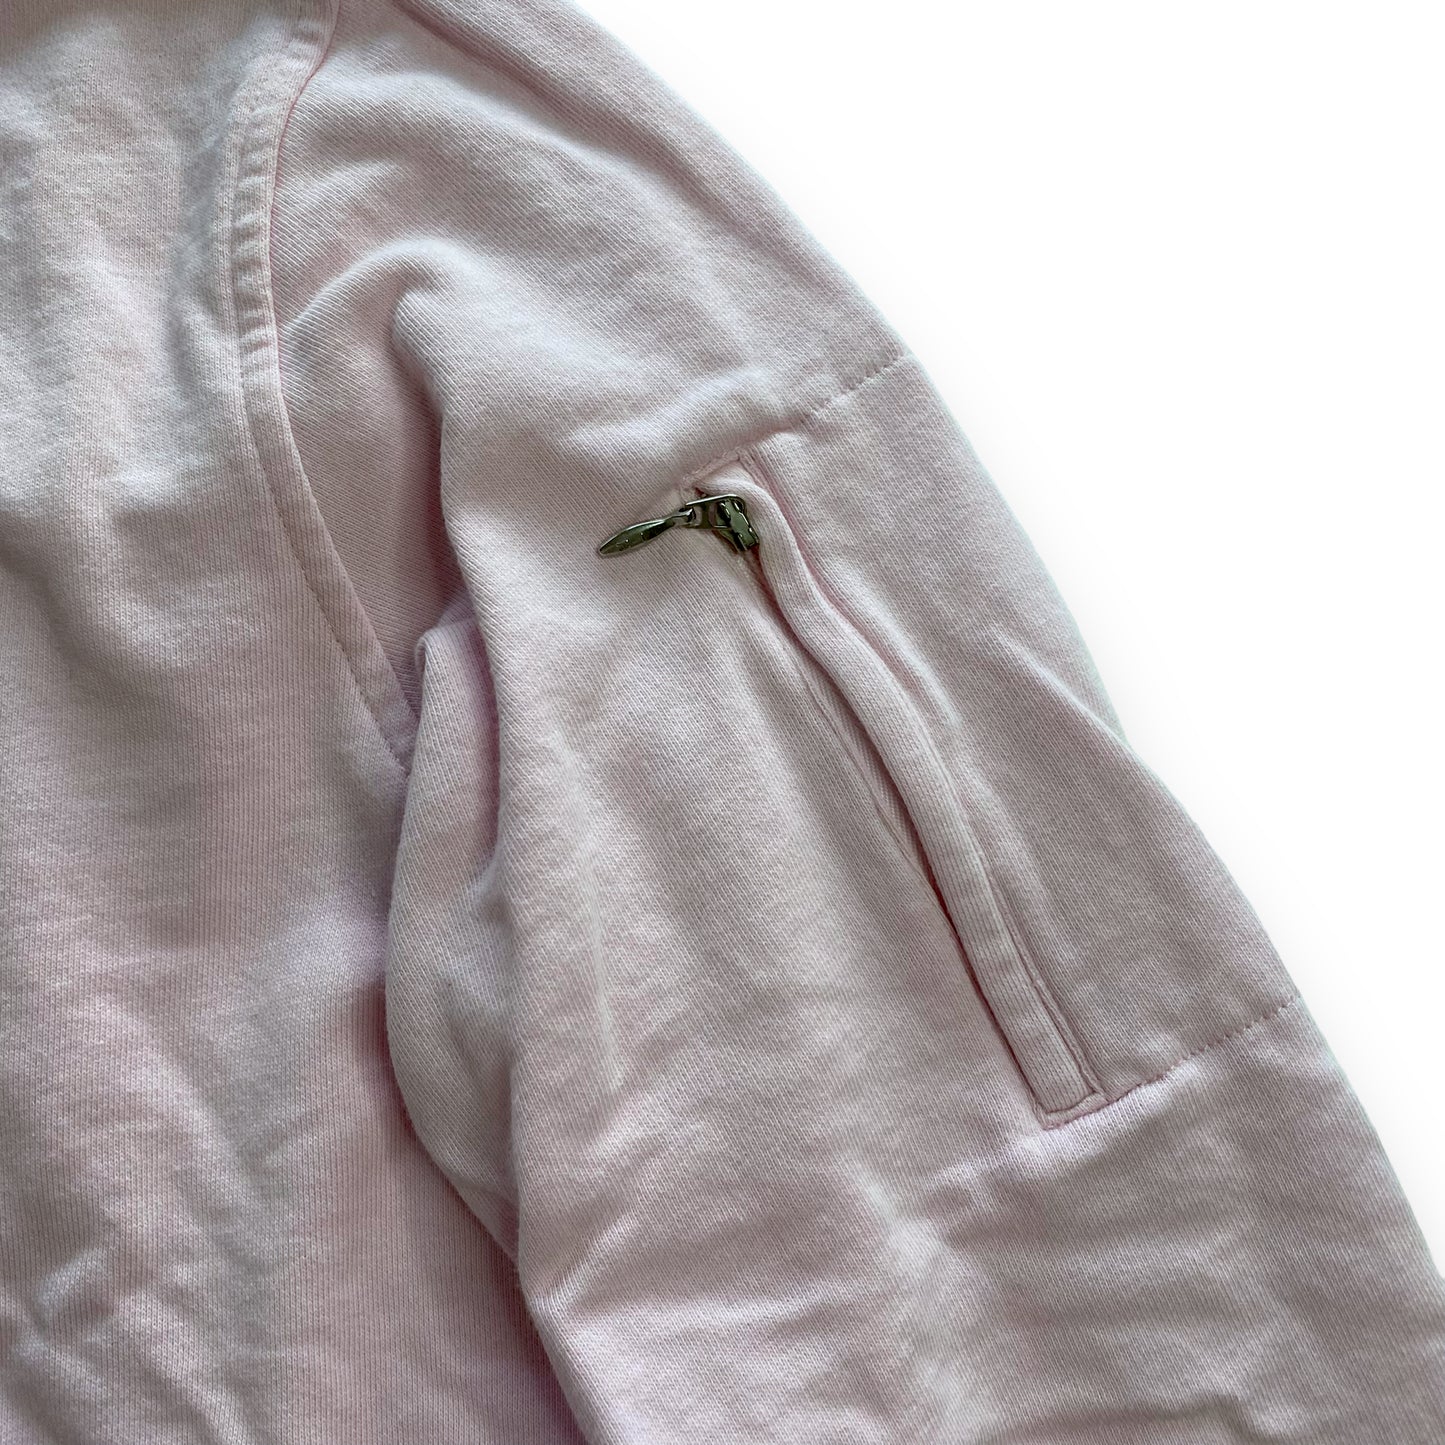 light pink zip hoodie Tommy Hilfiger B-QUALITY / Size L